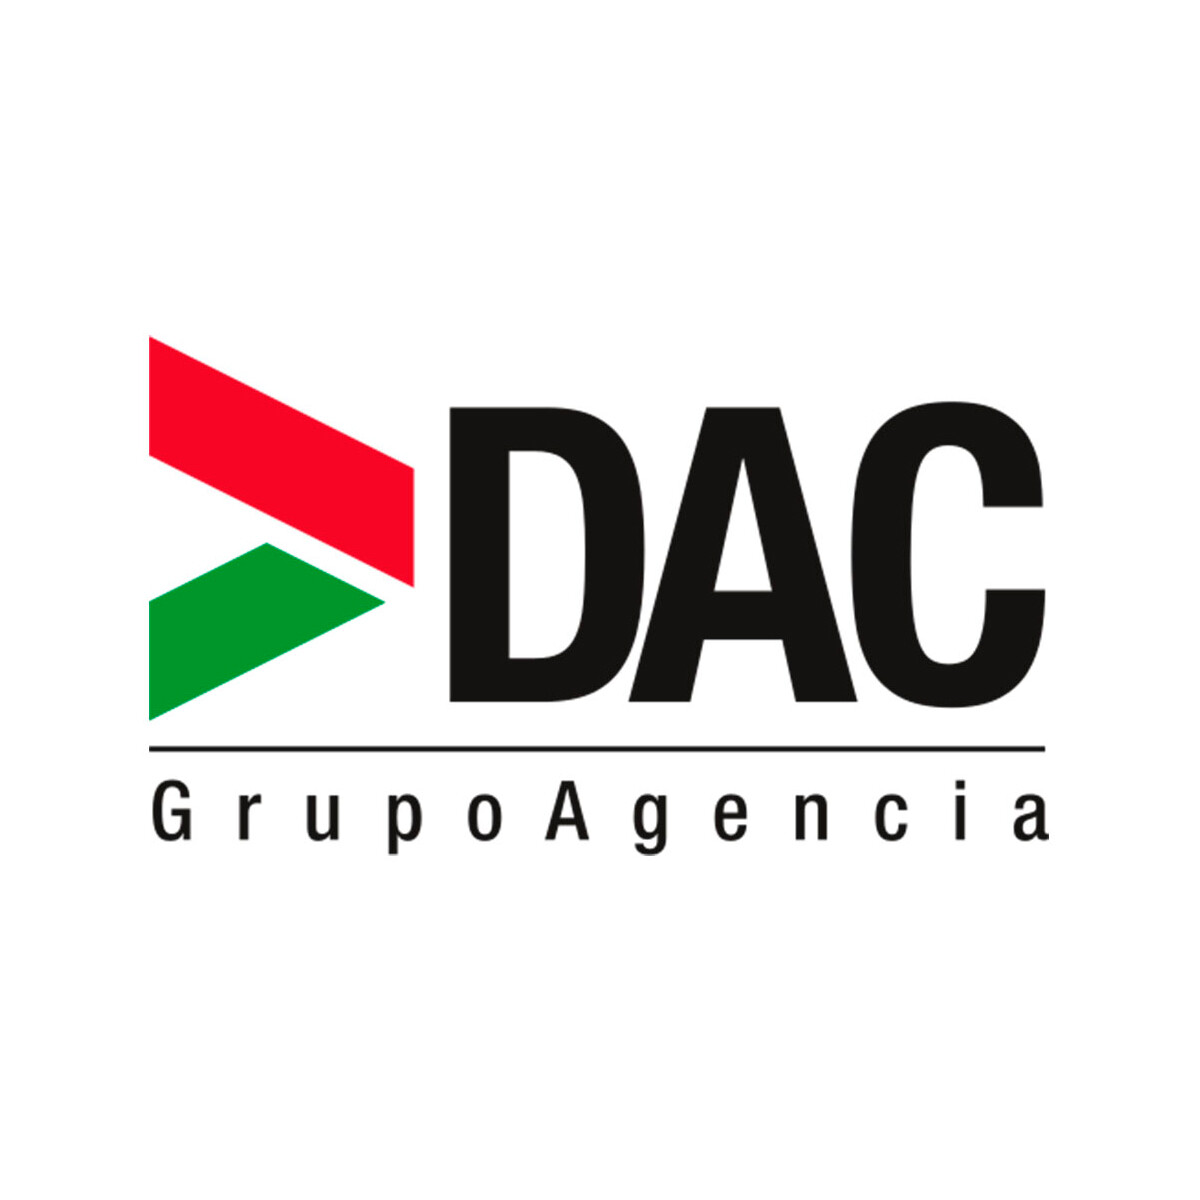 Grupo DAC - Agencia Central Todo el País